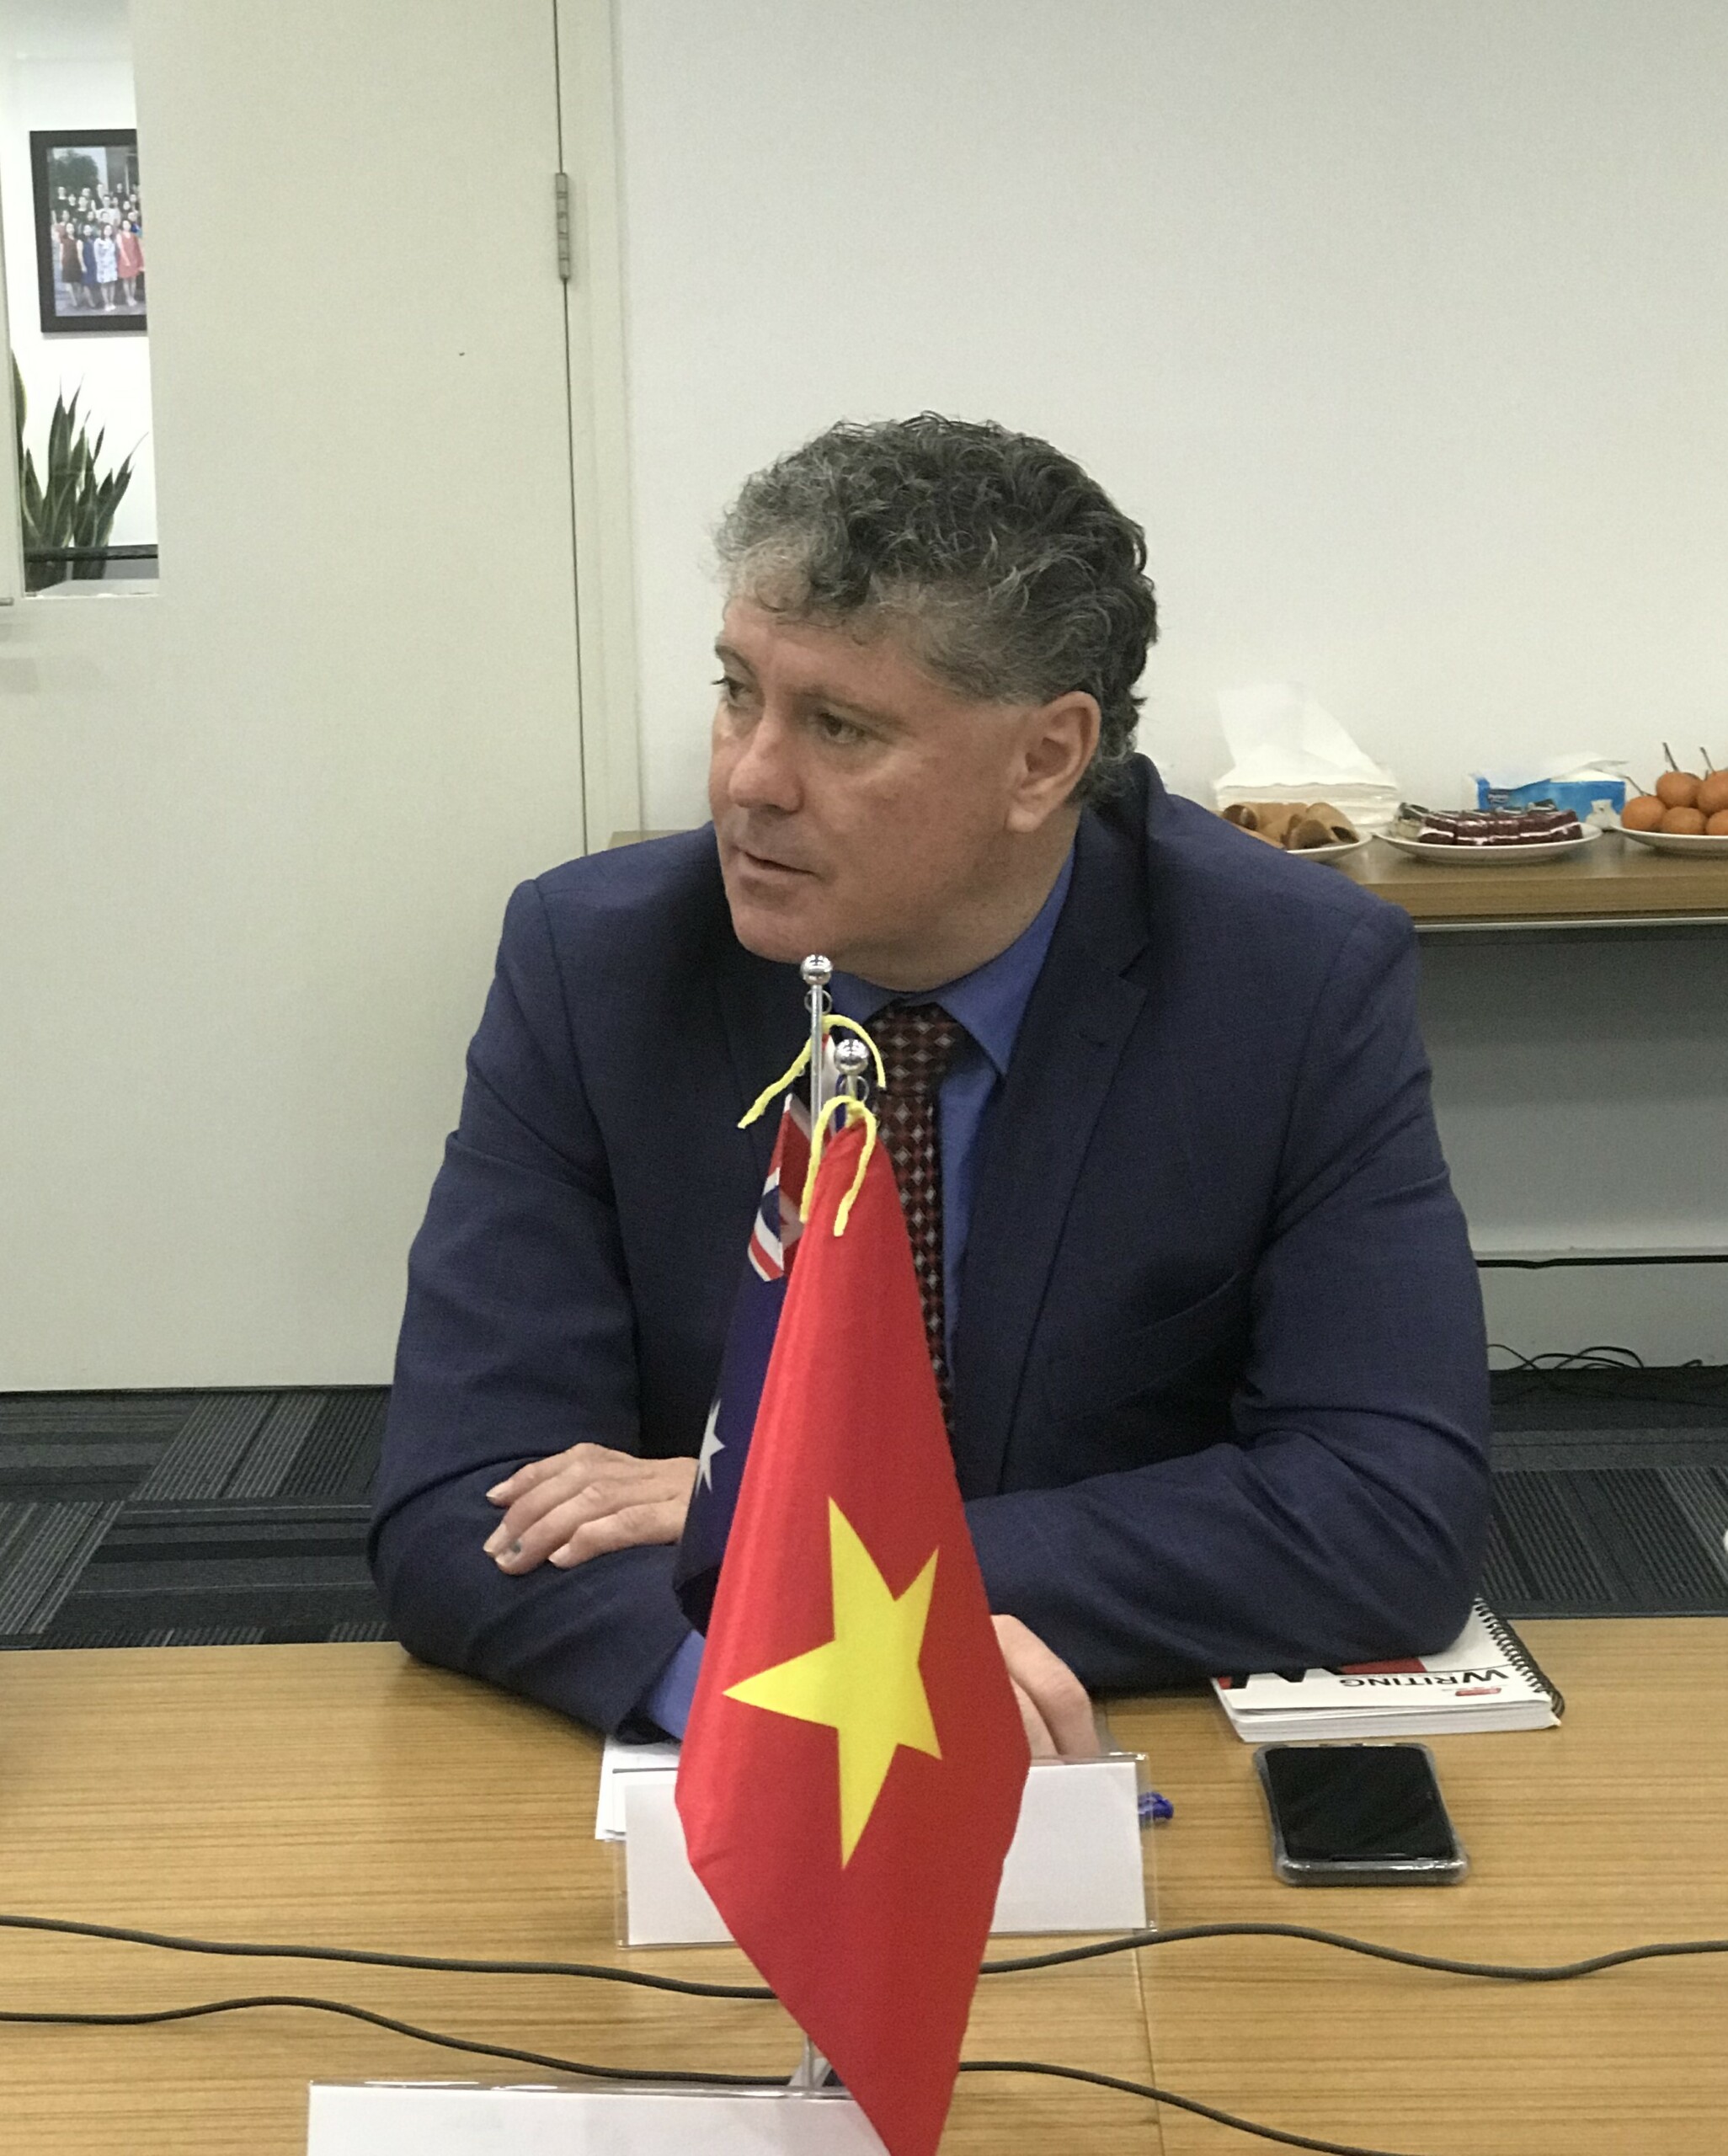 A photo of Tony Harman sitting behind an Australian and Vietnamese flag